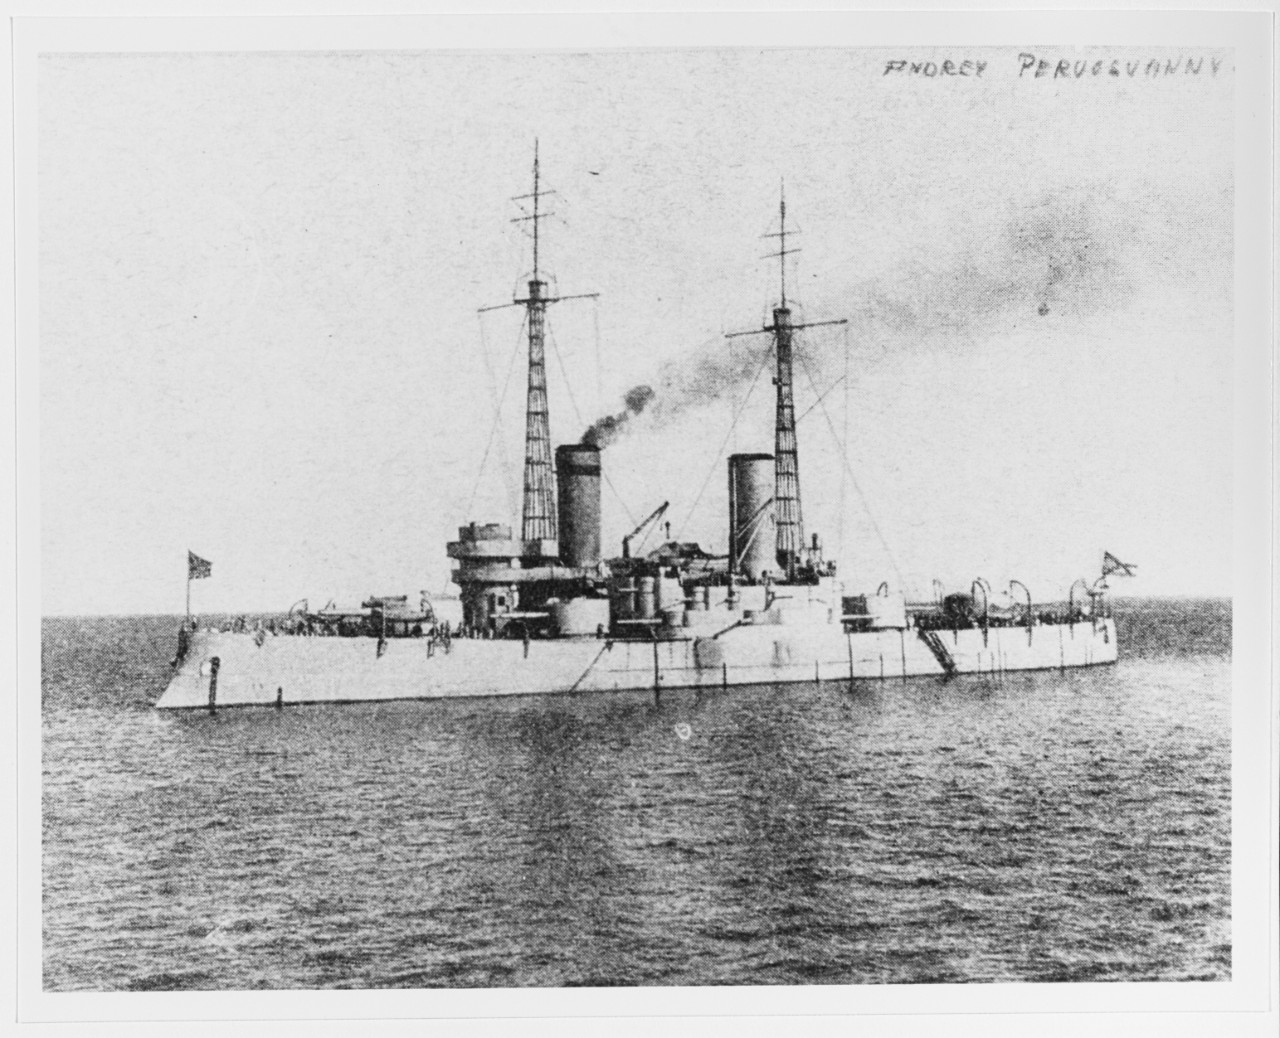 ANDREI PERVOZVANNY (Russian battleship, 1906-1922)